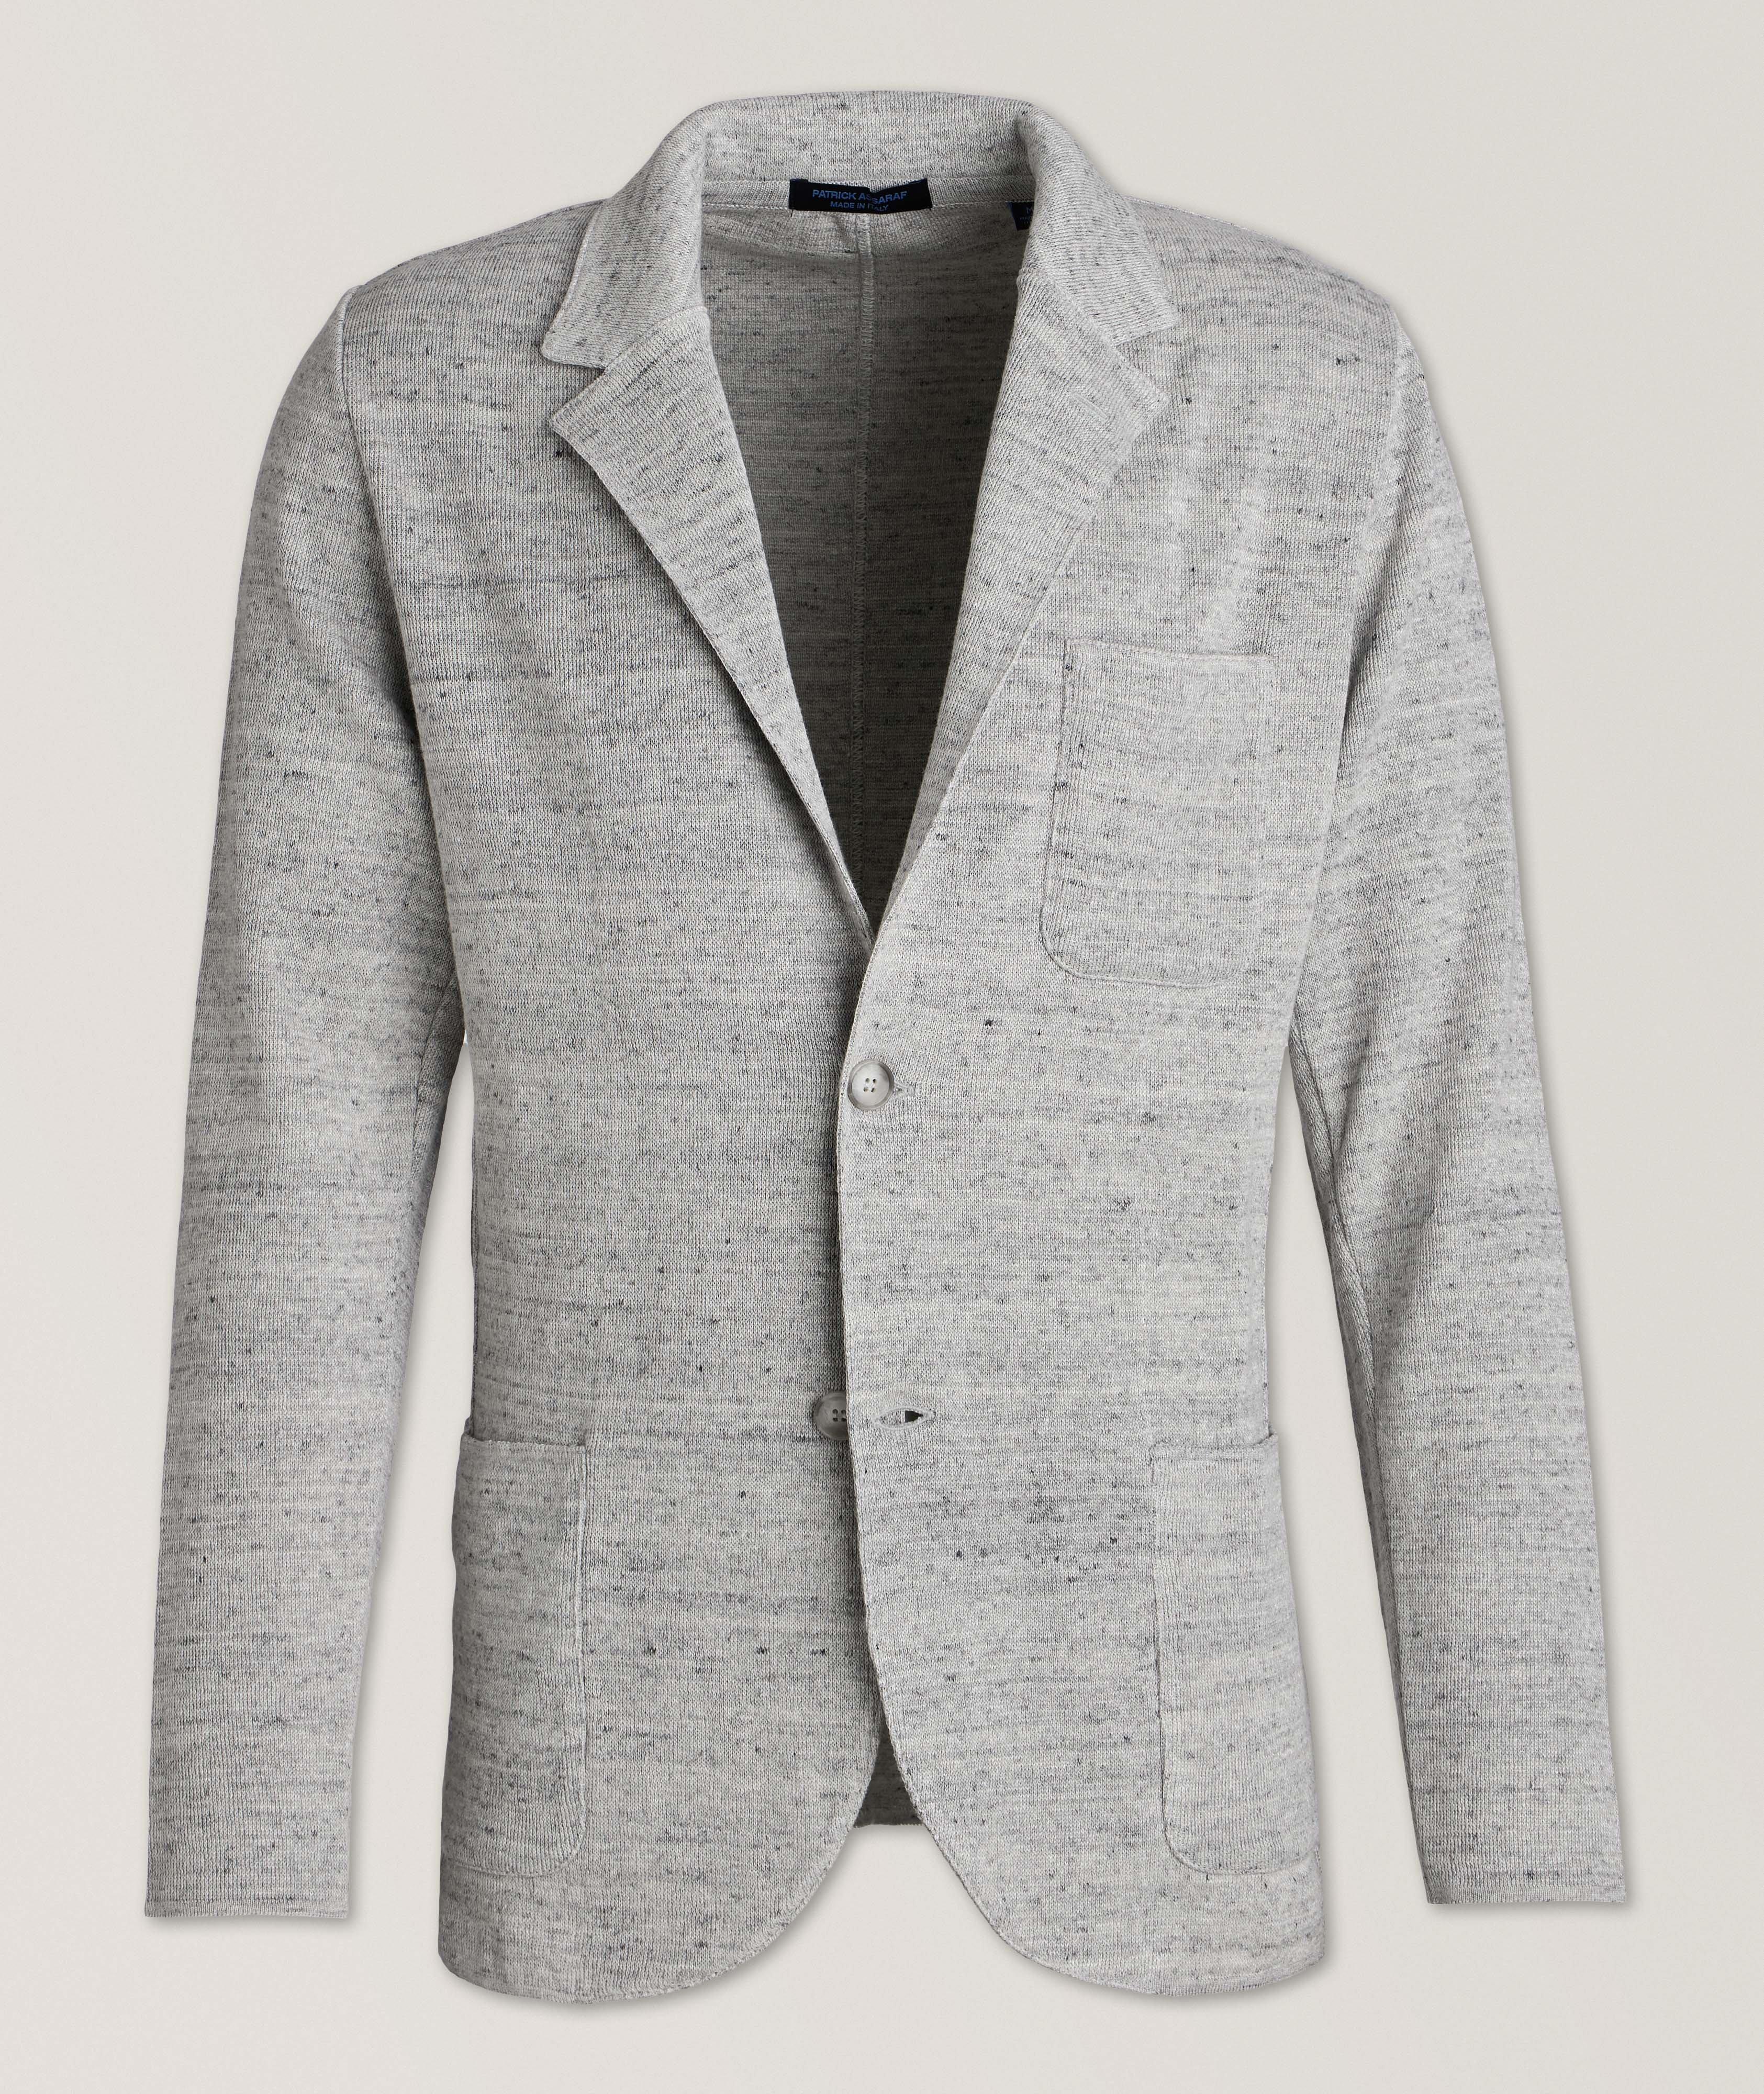 Marbled Linen-Cotton Sport Jacket image 0